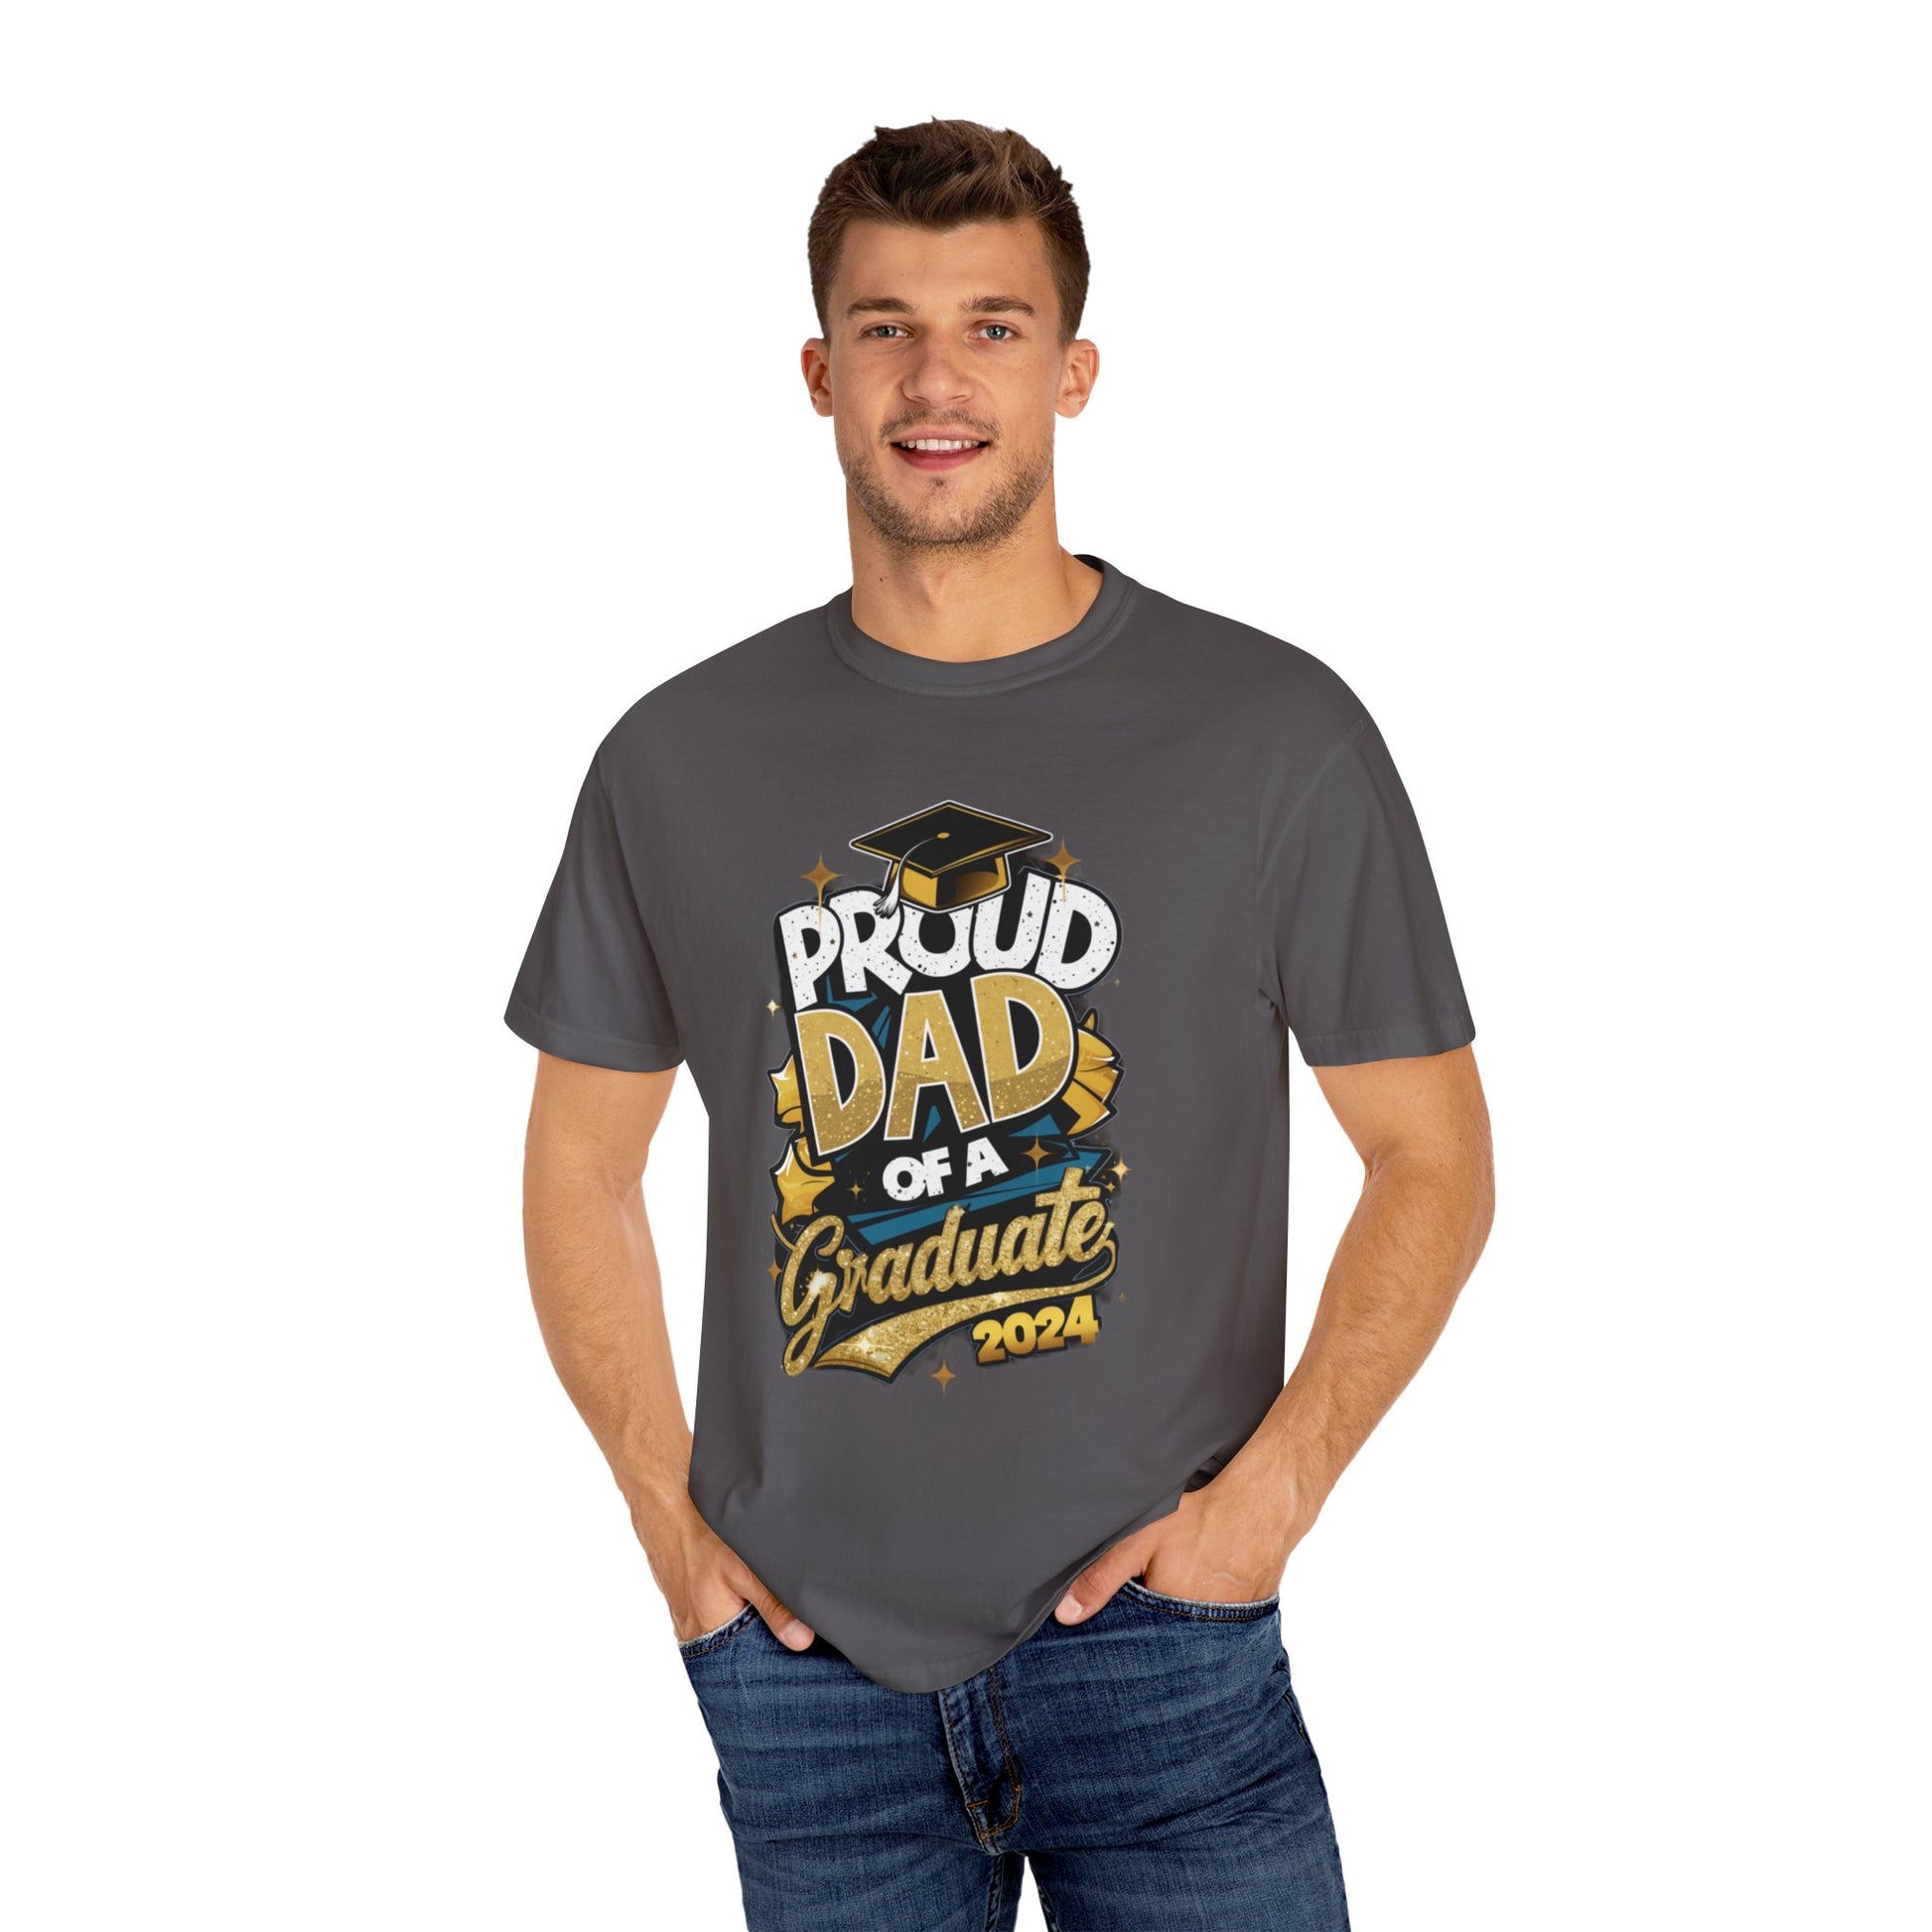 Proud Dad of a 2024 Graduate Unisex Garment-dyed T-shirt Cotton Funny Humorous Graphic Soft Premium Unisex Men Women Graphite T-shirt Birthday Gift-39